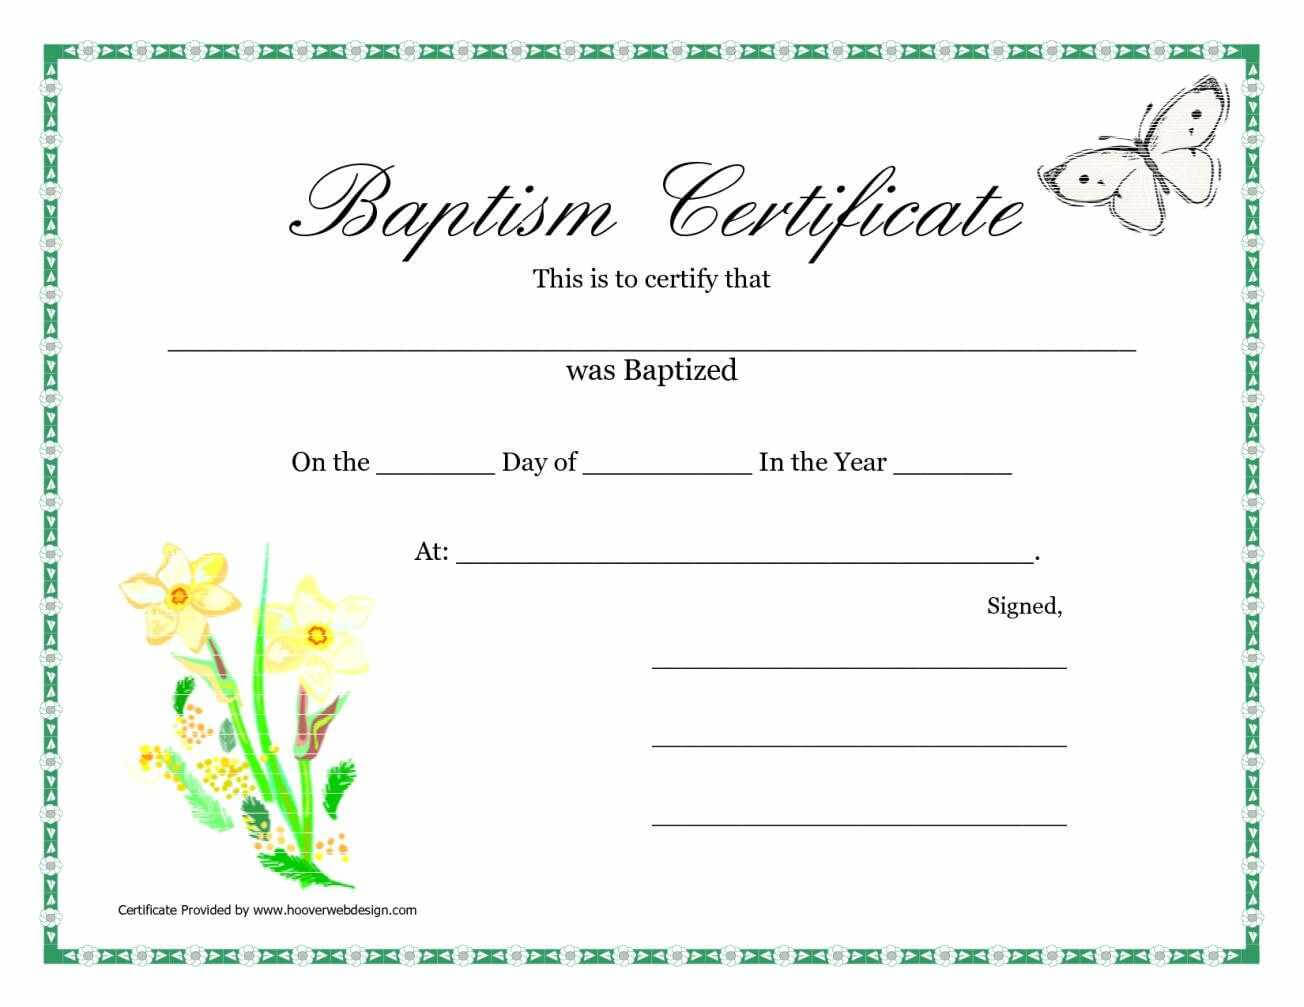 Sample Baptism Certificate Templates | Sample Certificate Throughout Christian Baptism Certificate Template